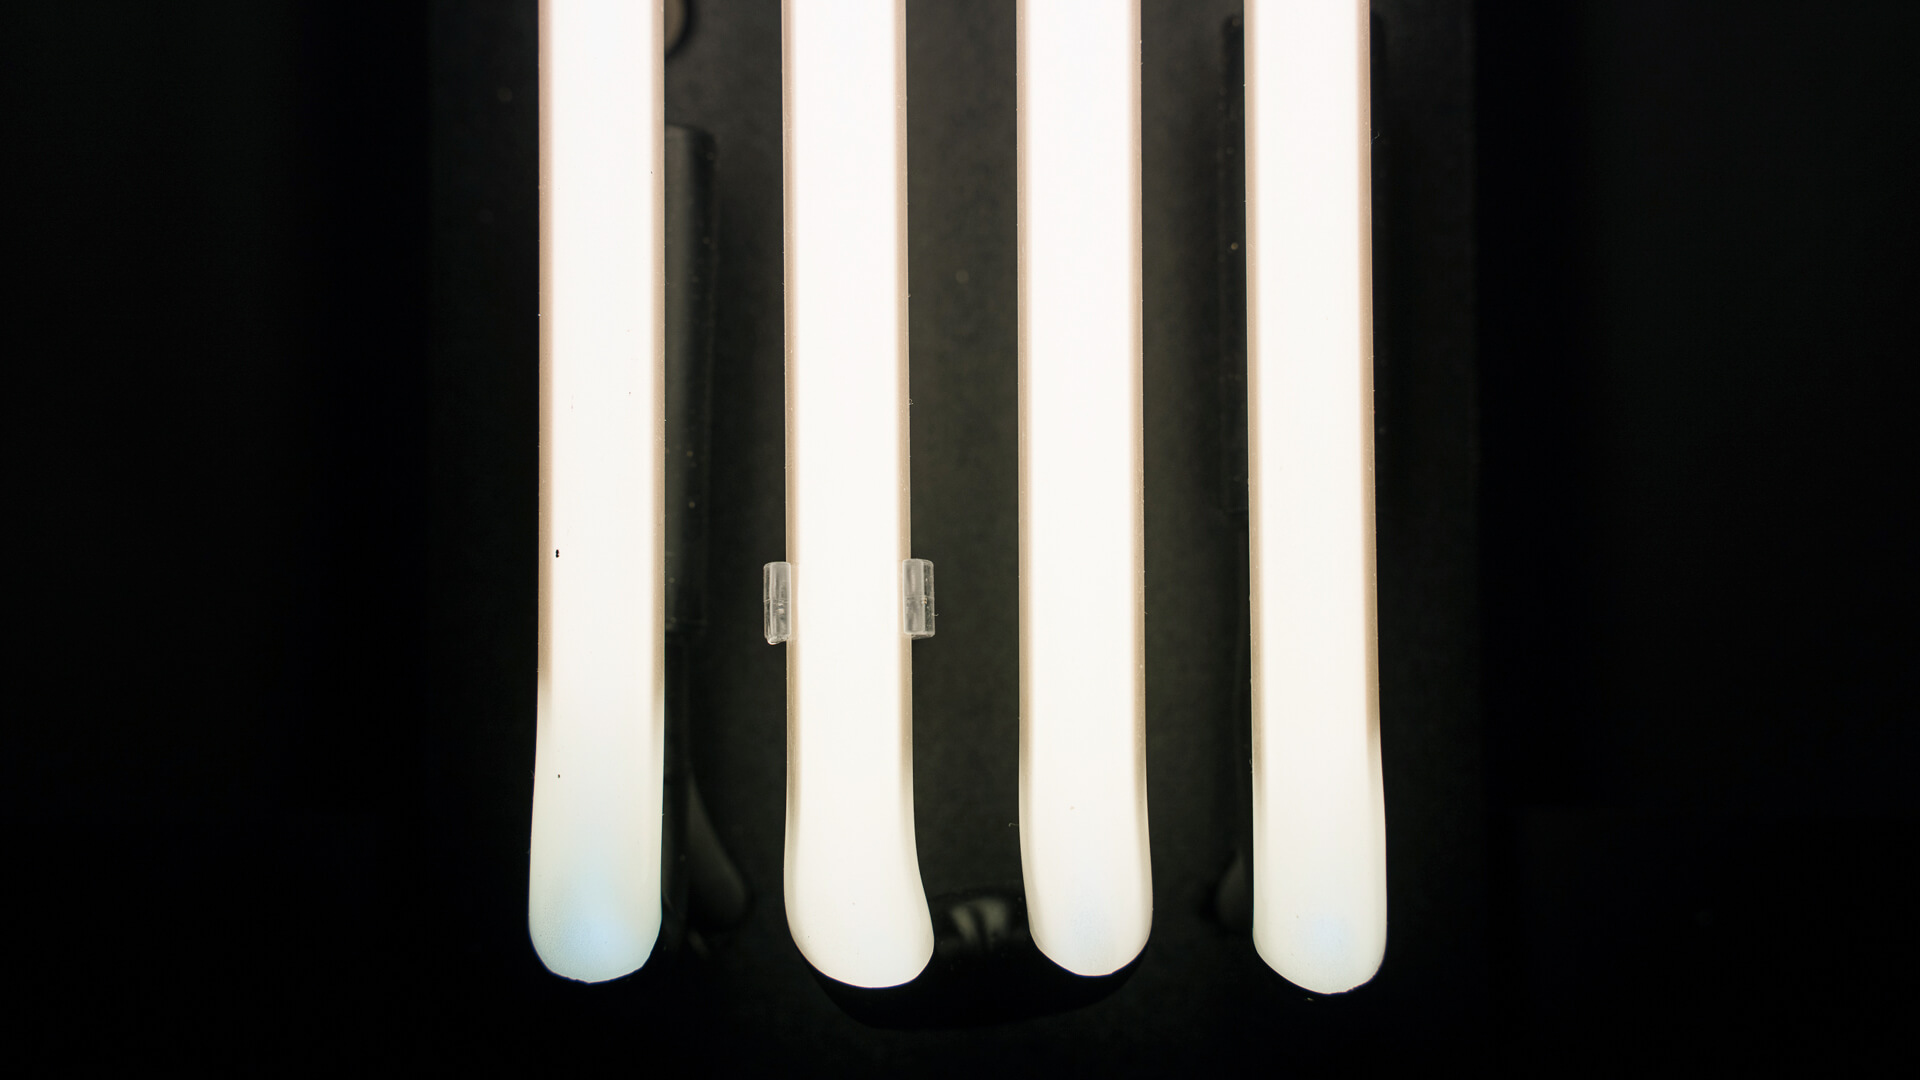 Neon Tamara Lempicka - White neutral neon